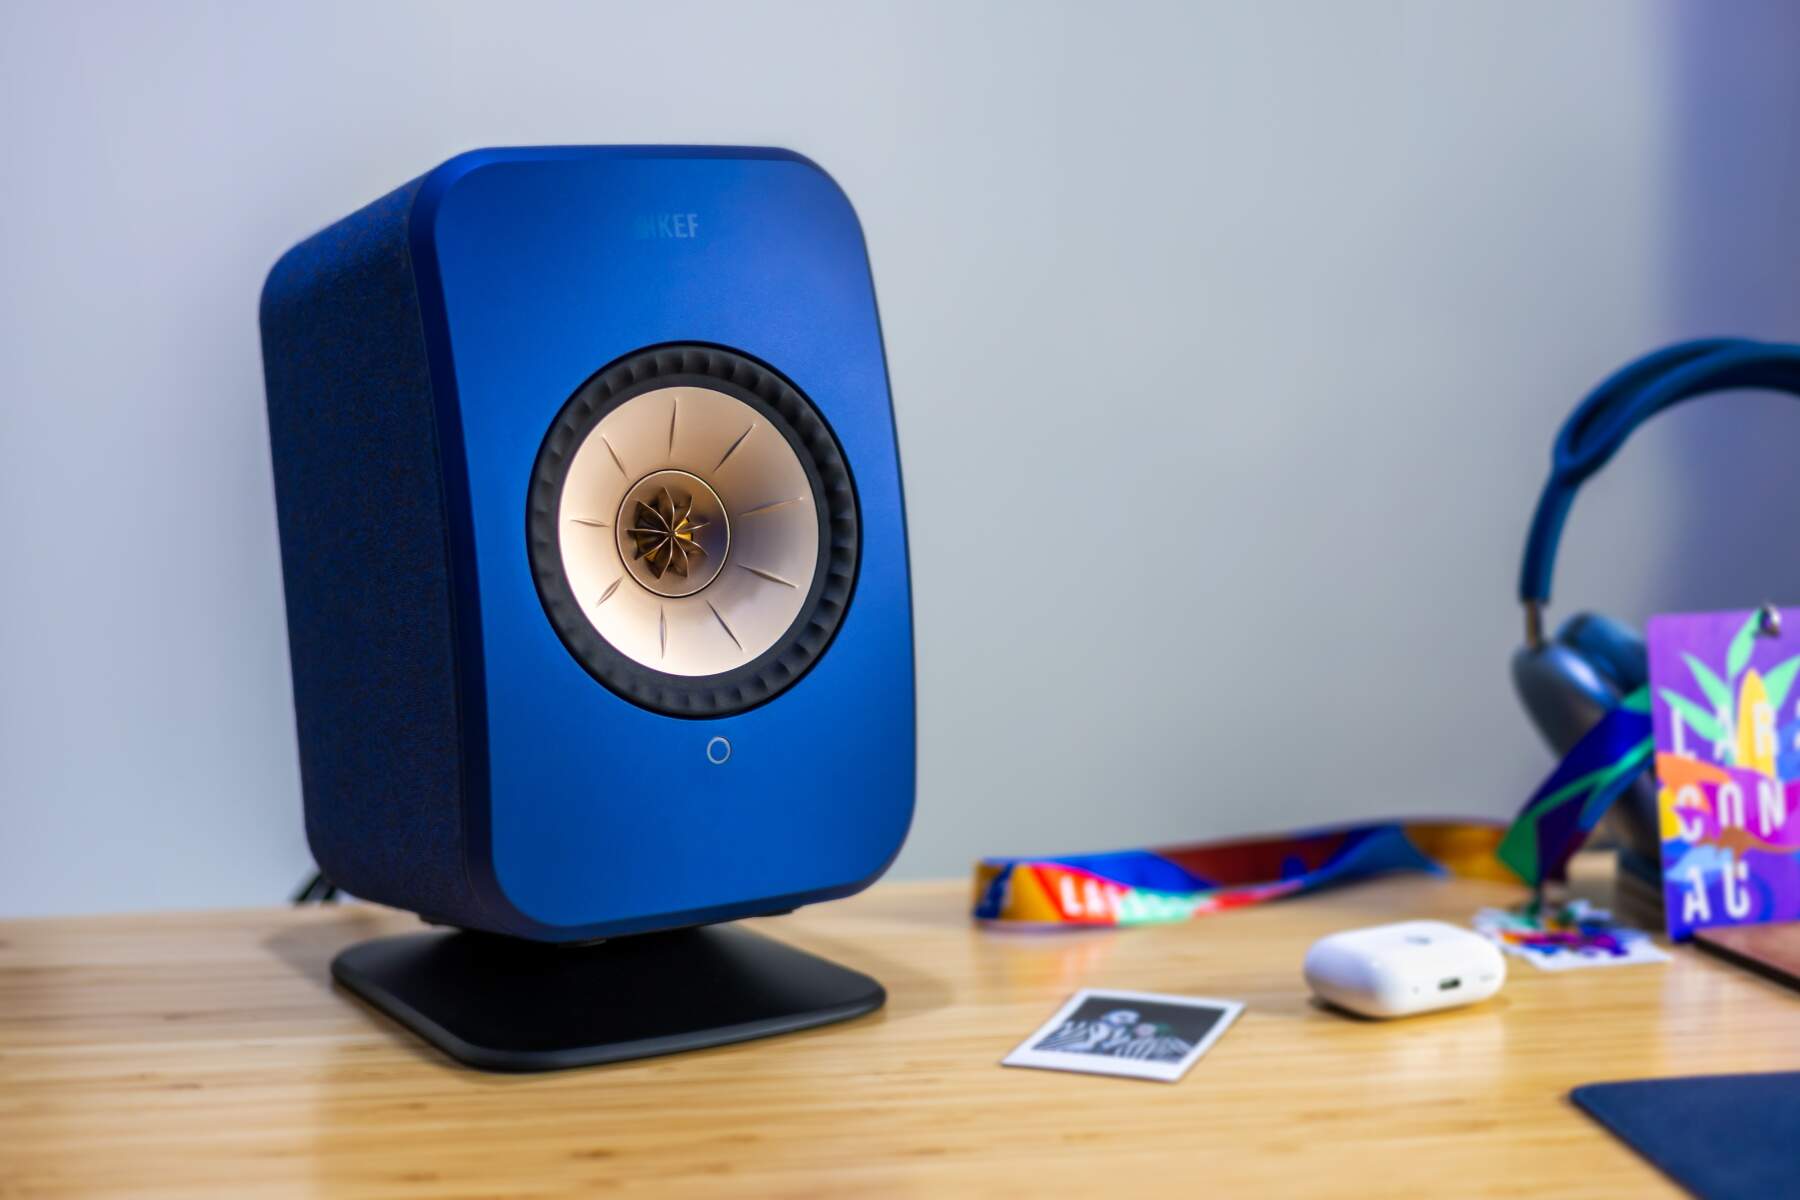 My home office loud speaker journey: a buyer’s guide